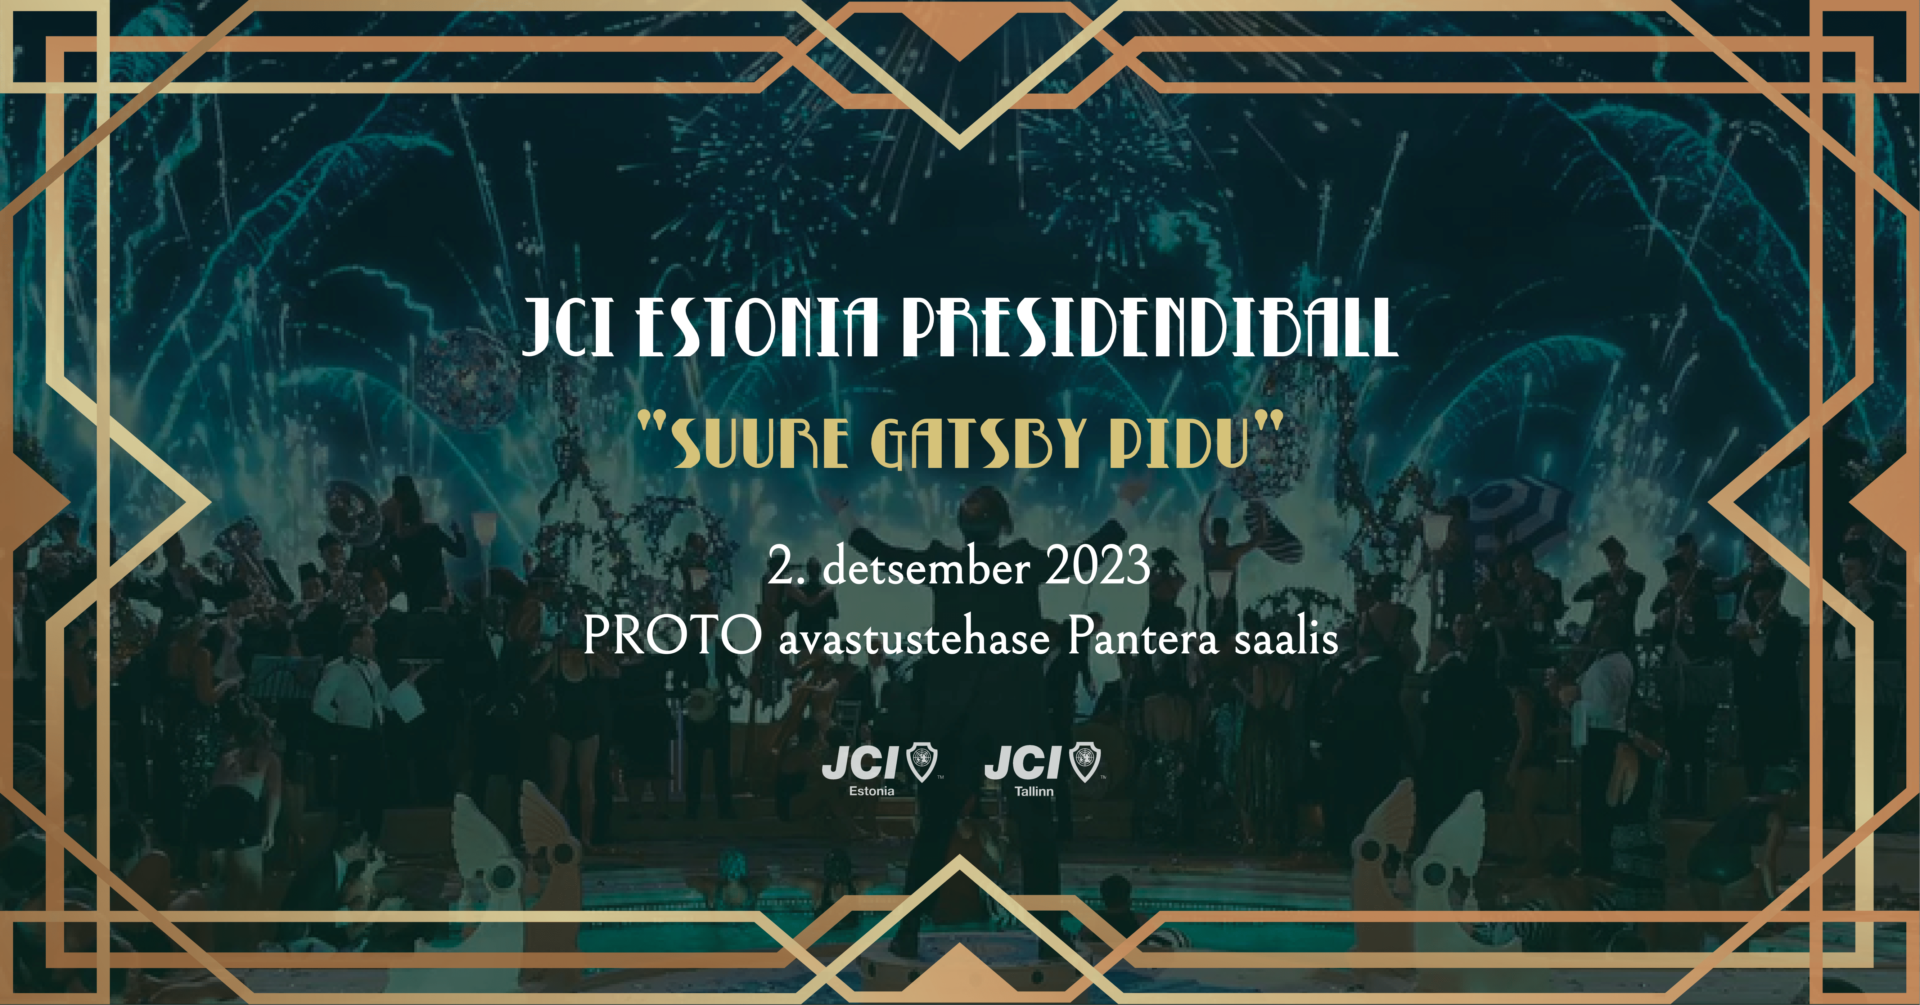 JCI Estonia Presidential Ball Facebook event